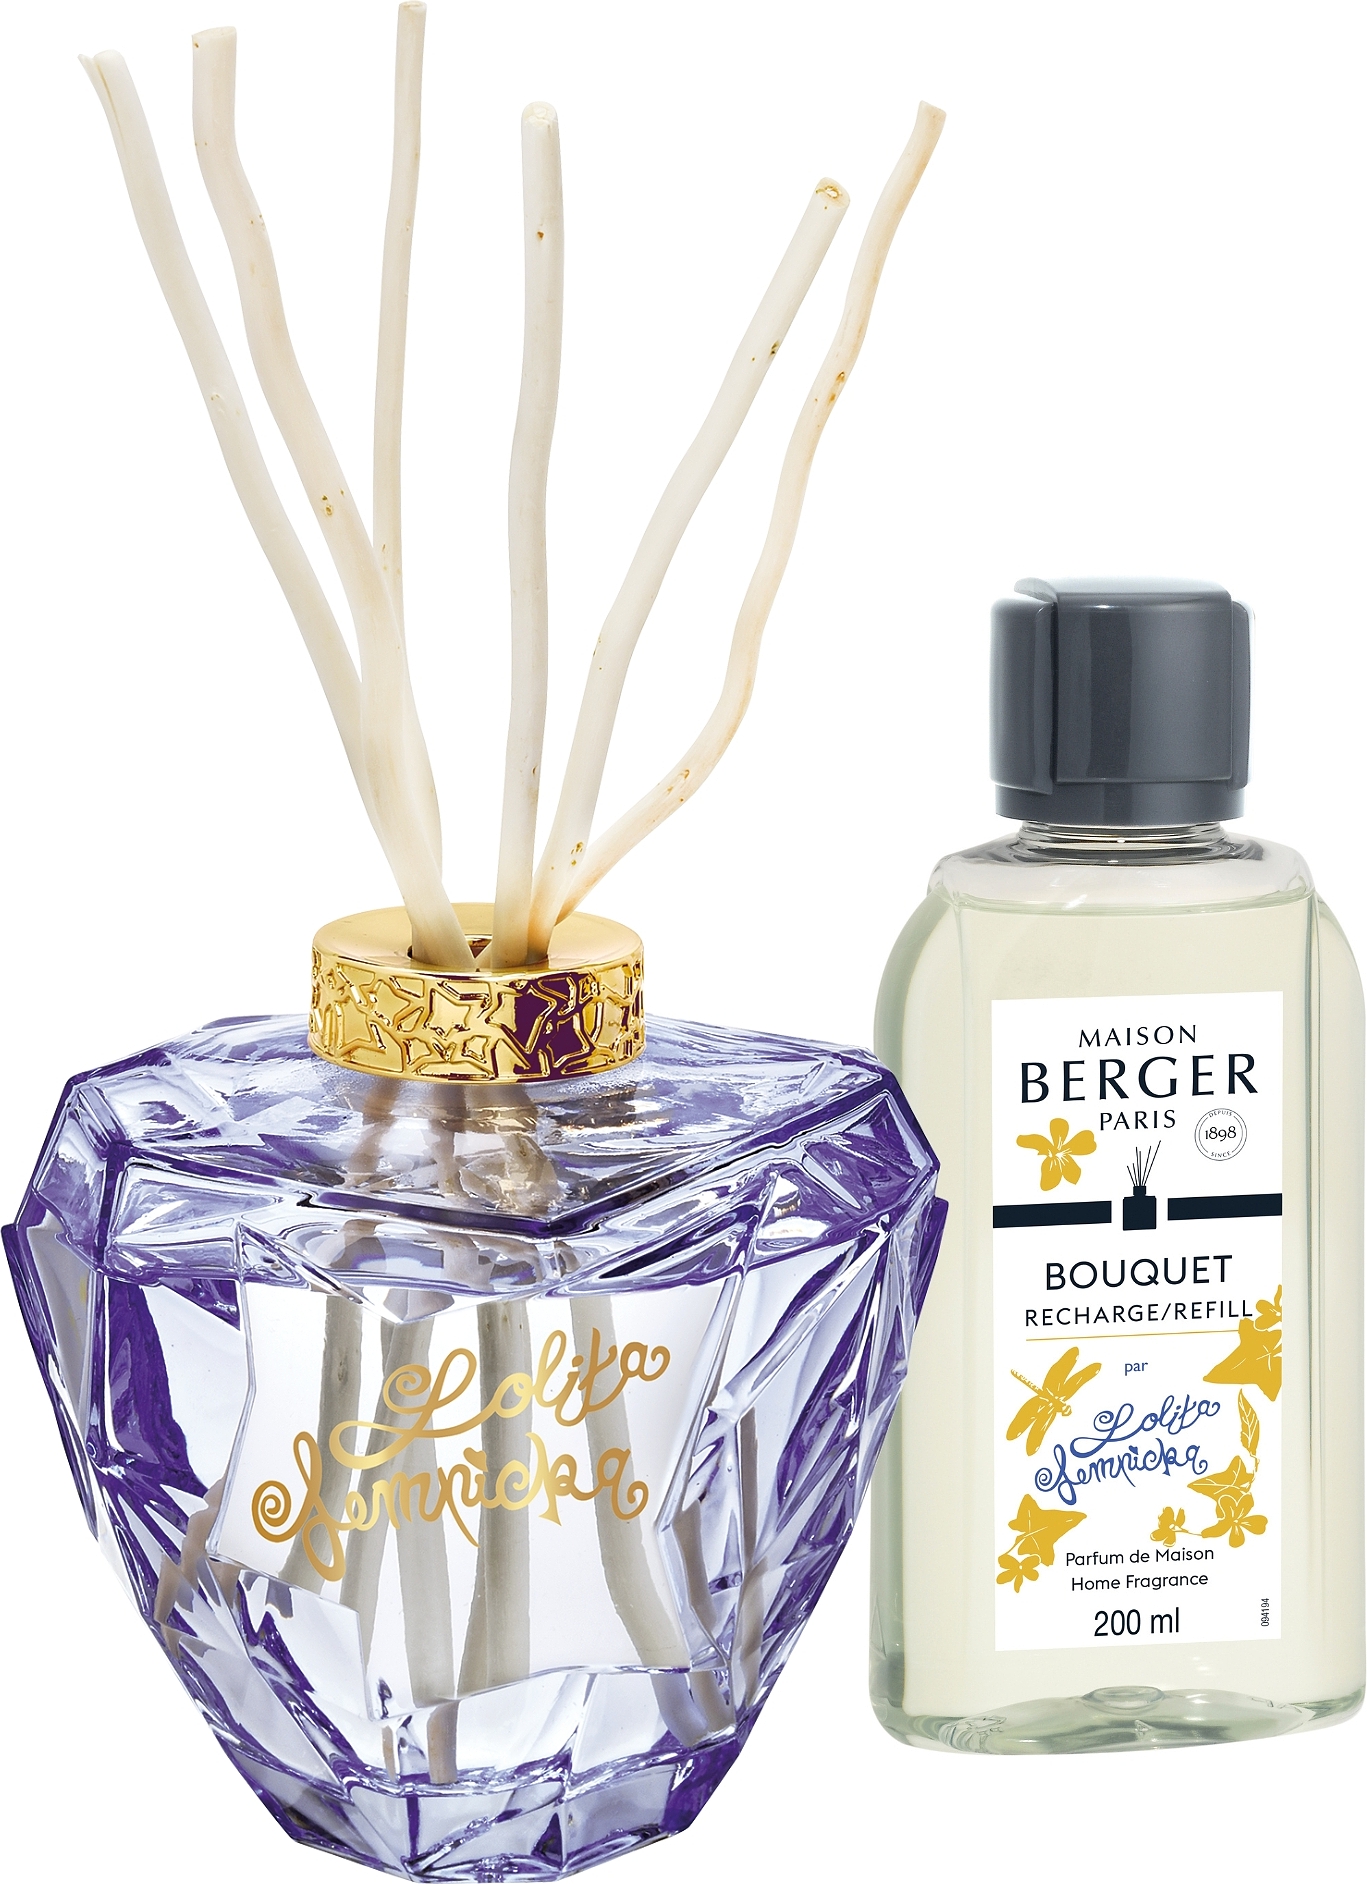 https://3fa-media.com/maison-berger-paris/maison-berger-paris-lolita-premium-fragrance-diffuser-violet__137363_fbb119b-s2500x2500.jpg